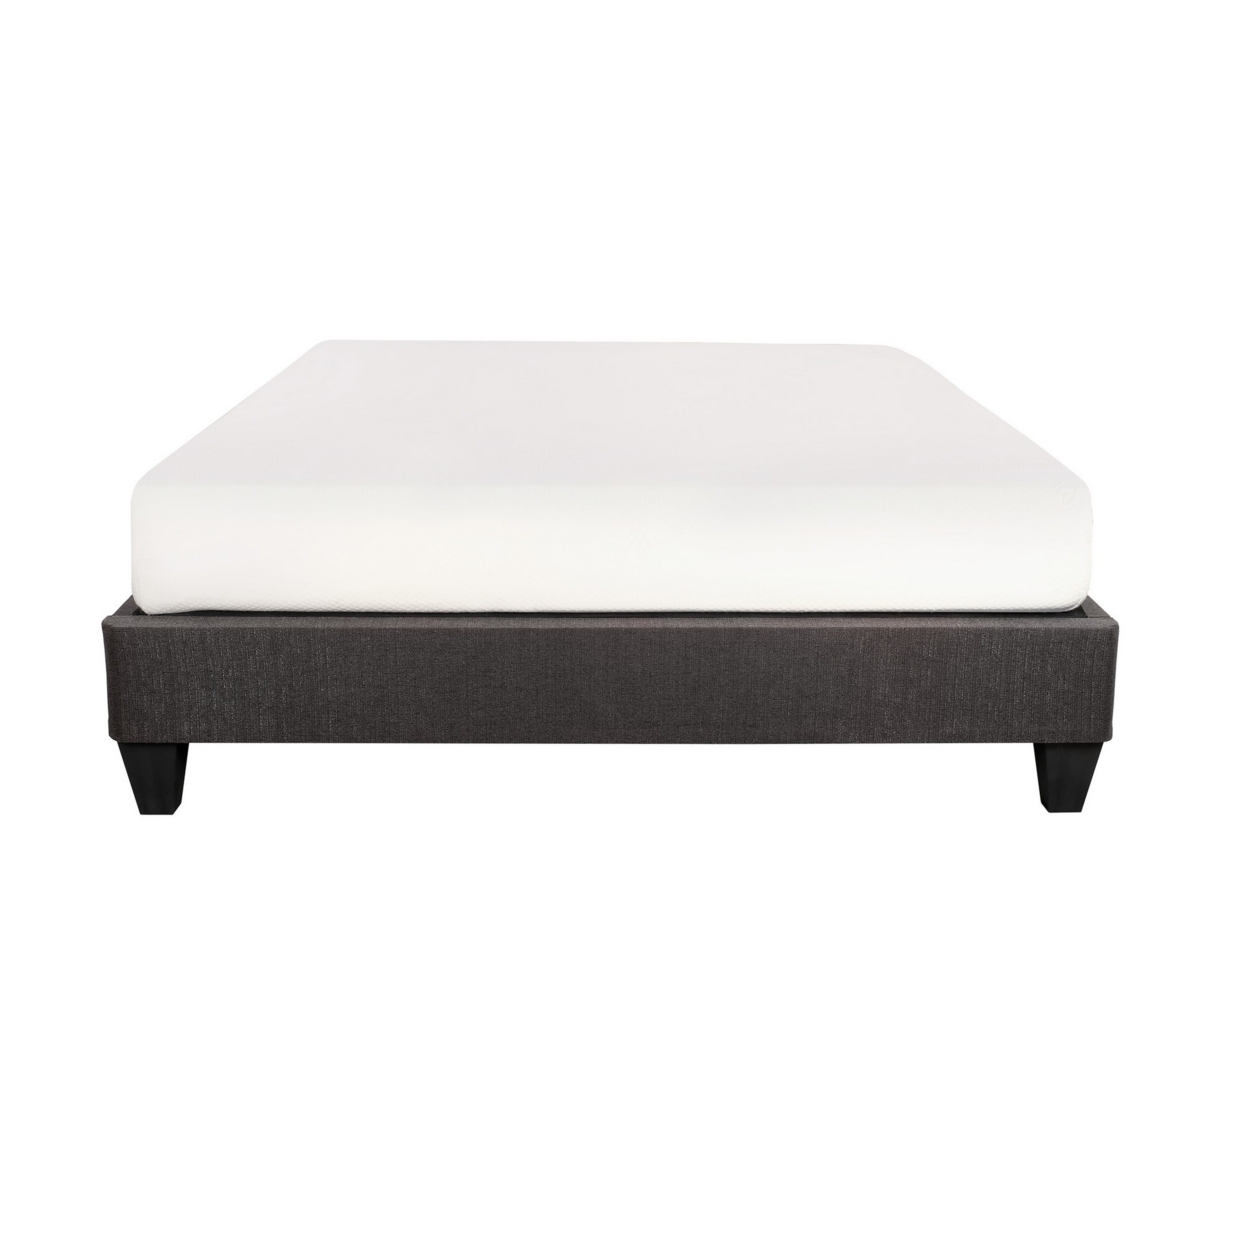 Tamy 13 Inch Full Size Platform Bed Frame, Wood Base, Dark Gray Linen- Saltoro Sherpi